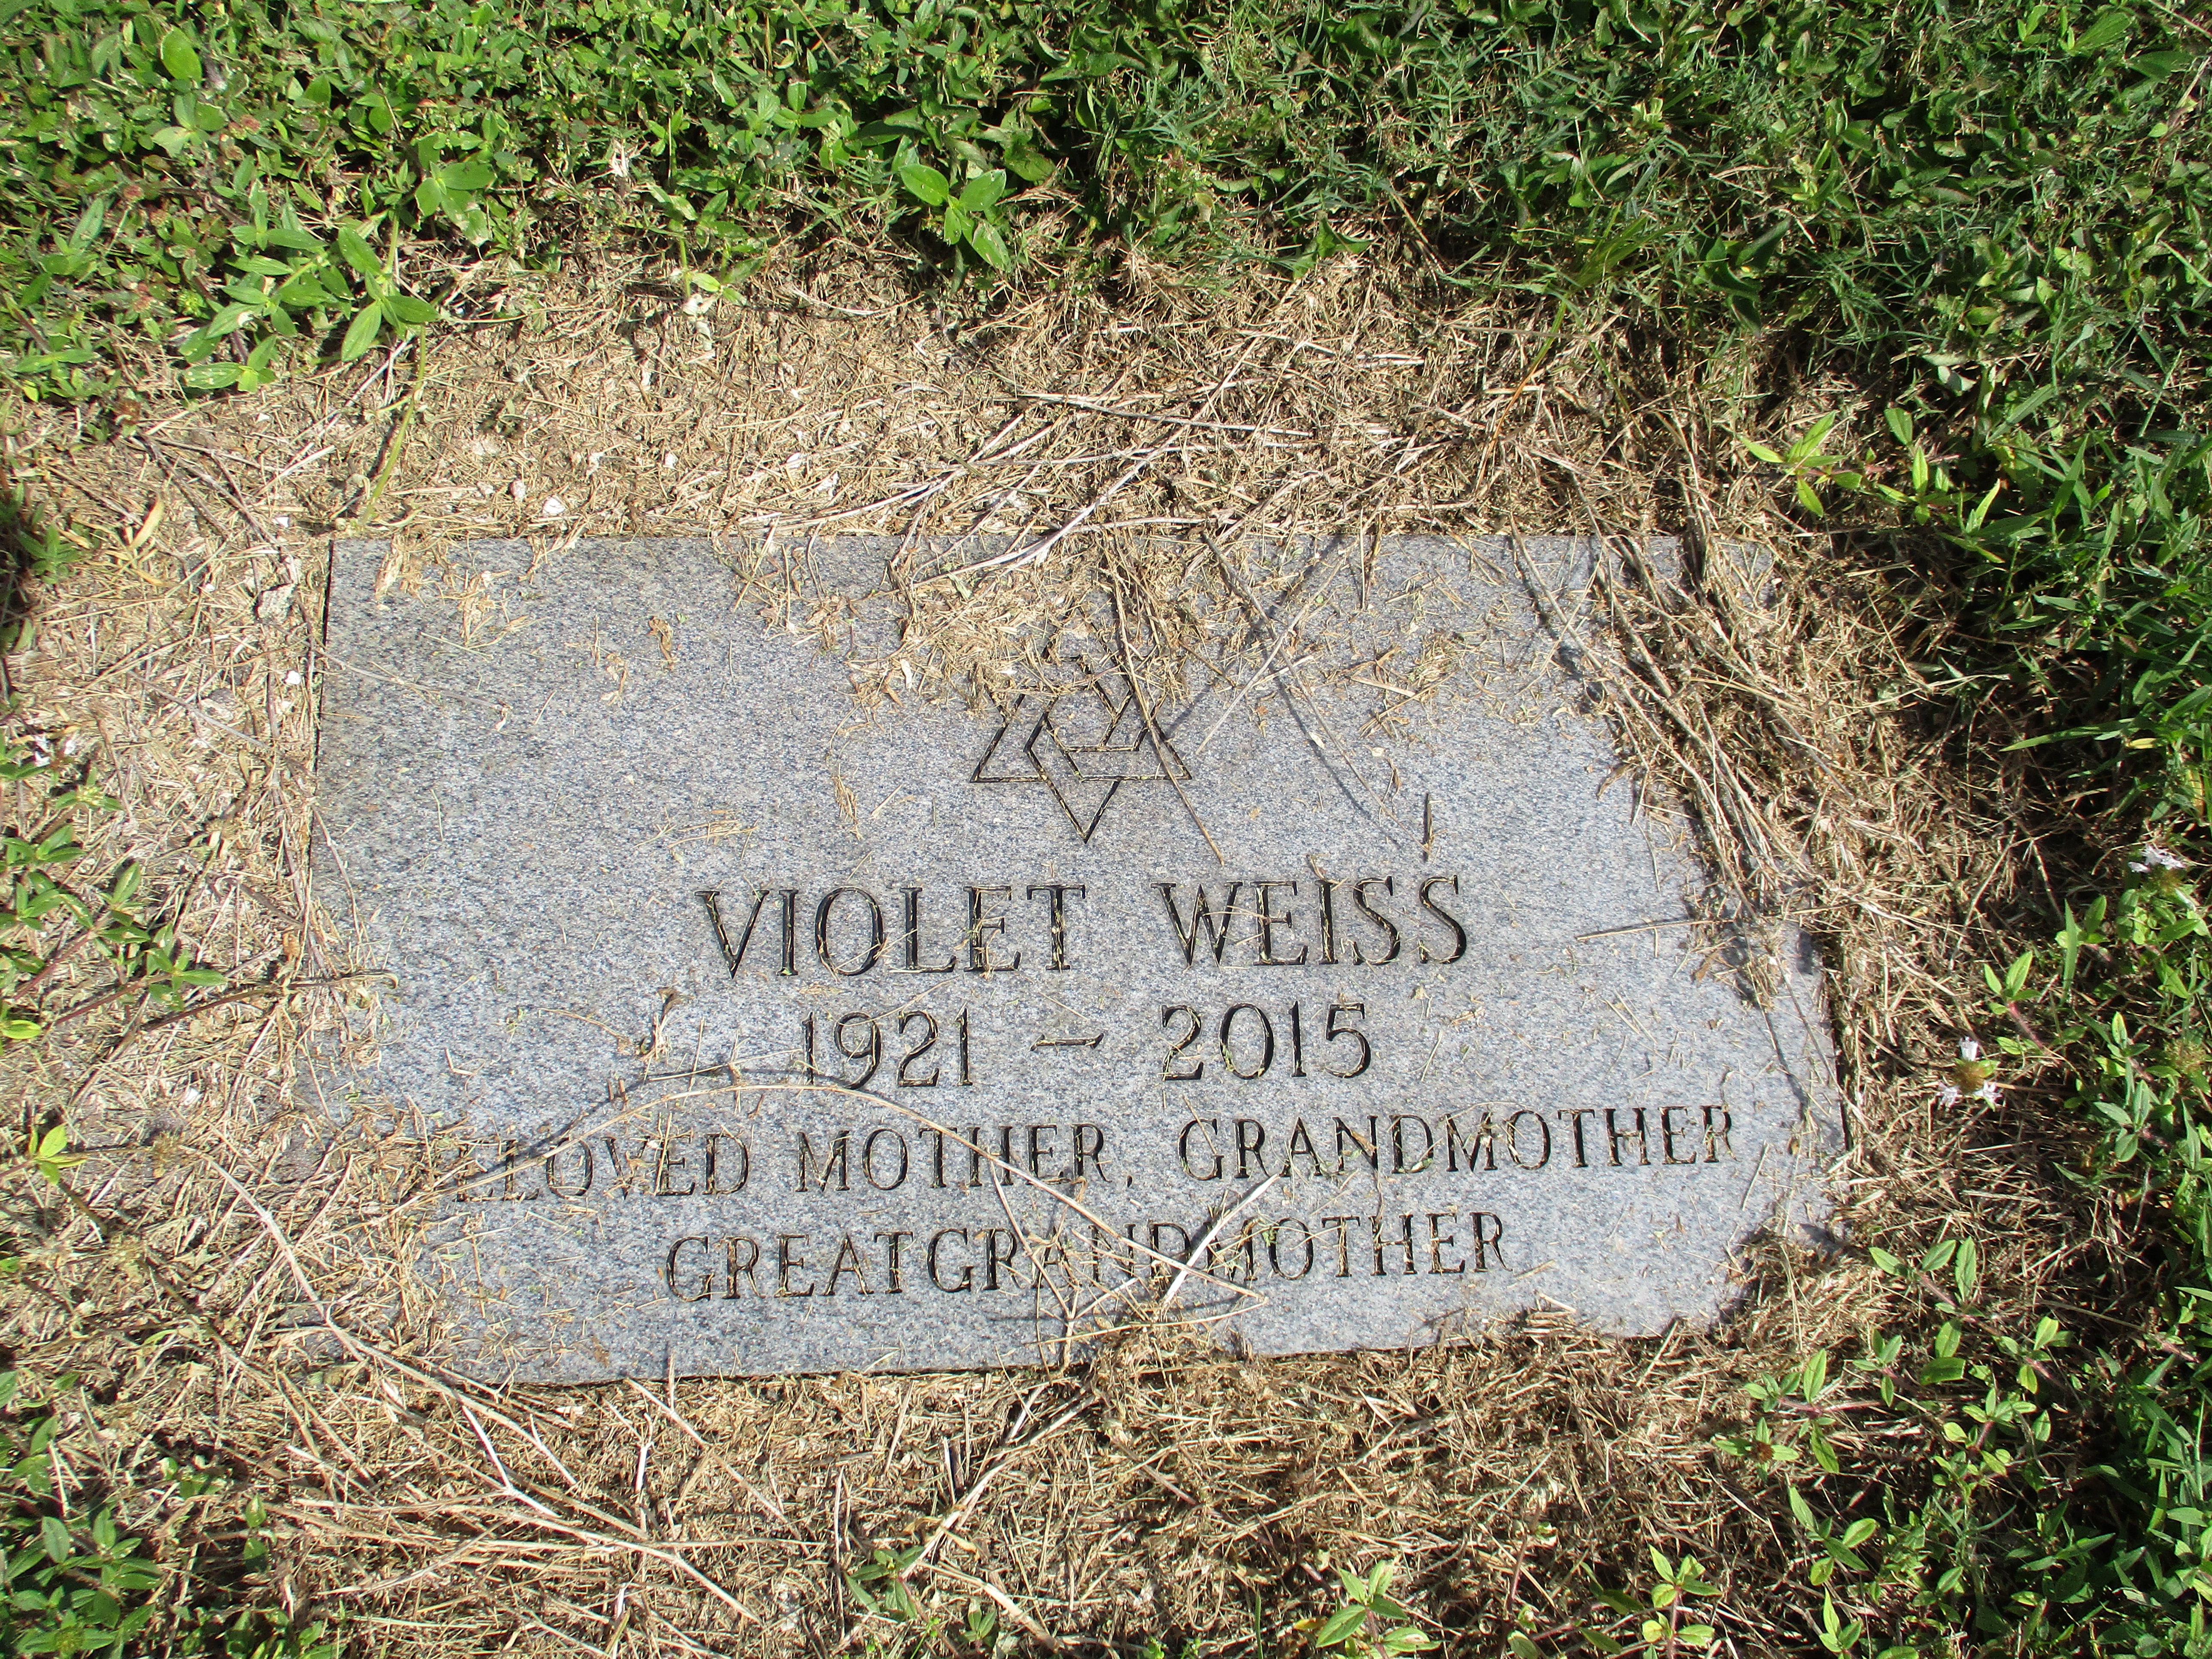 Violet Weiss